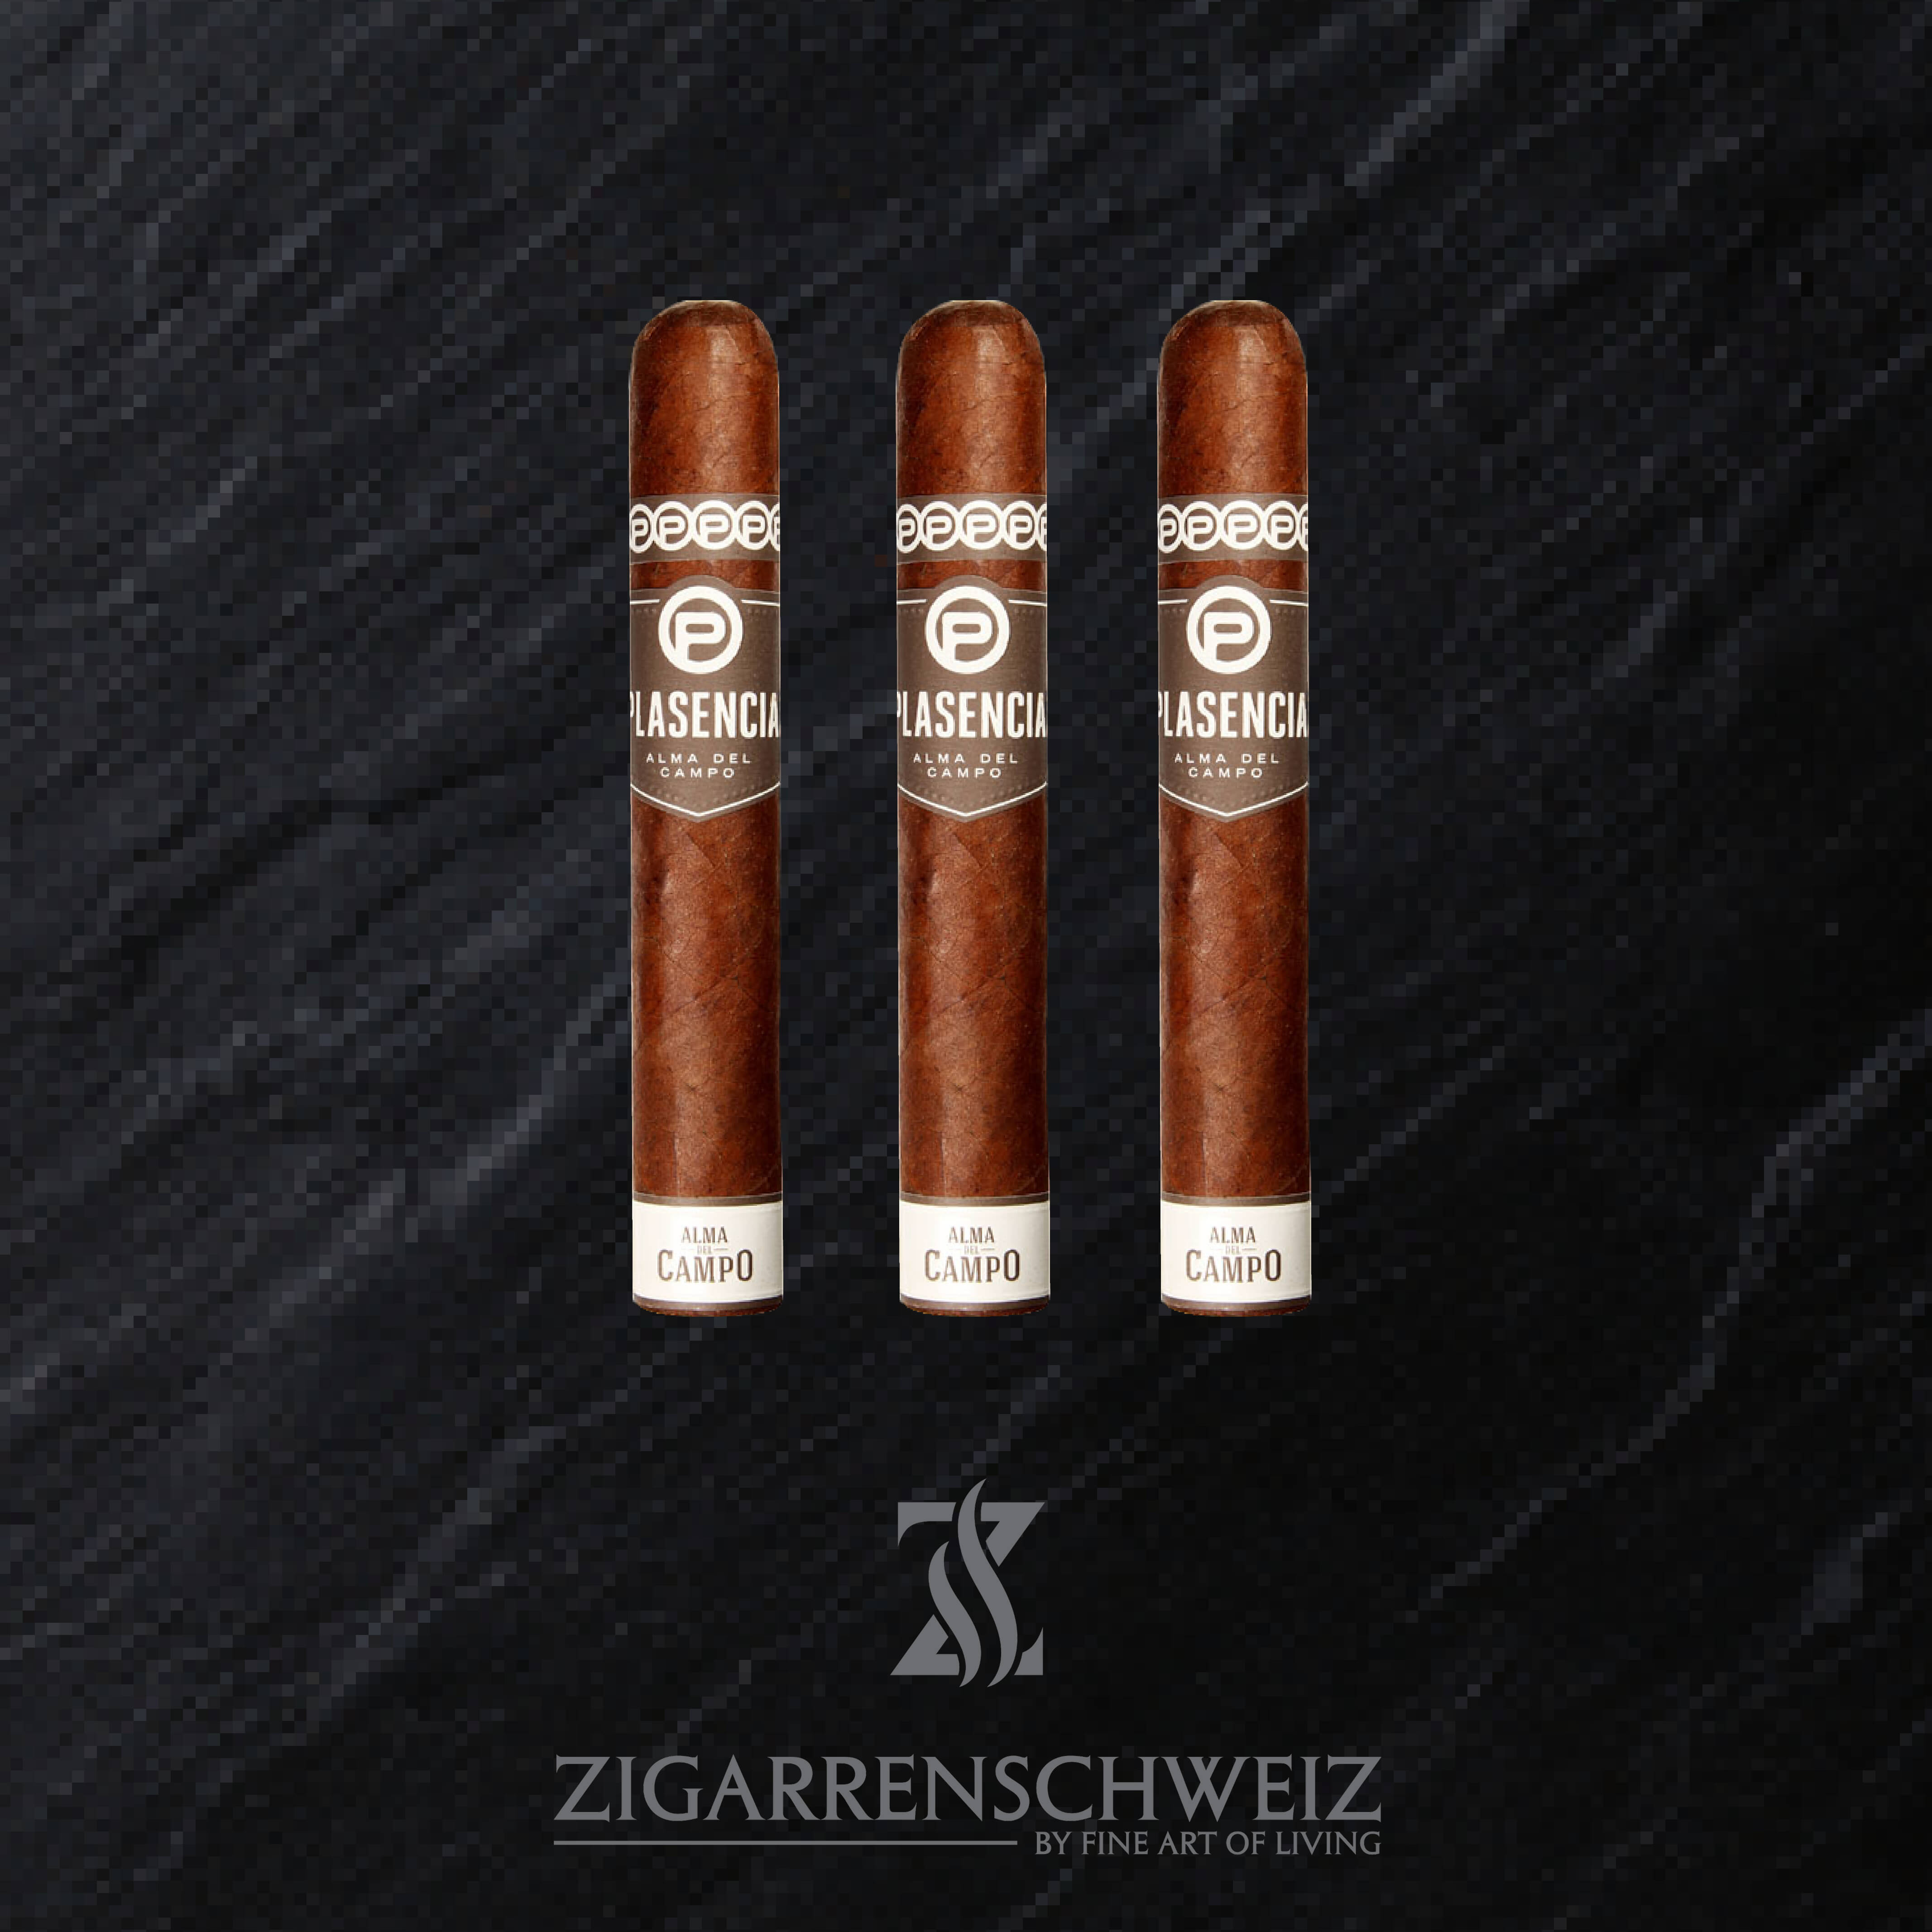 3er Etui Plasencia Alma del Campo Guajiro Zigarren im Robusto Gordo Format